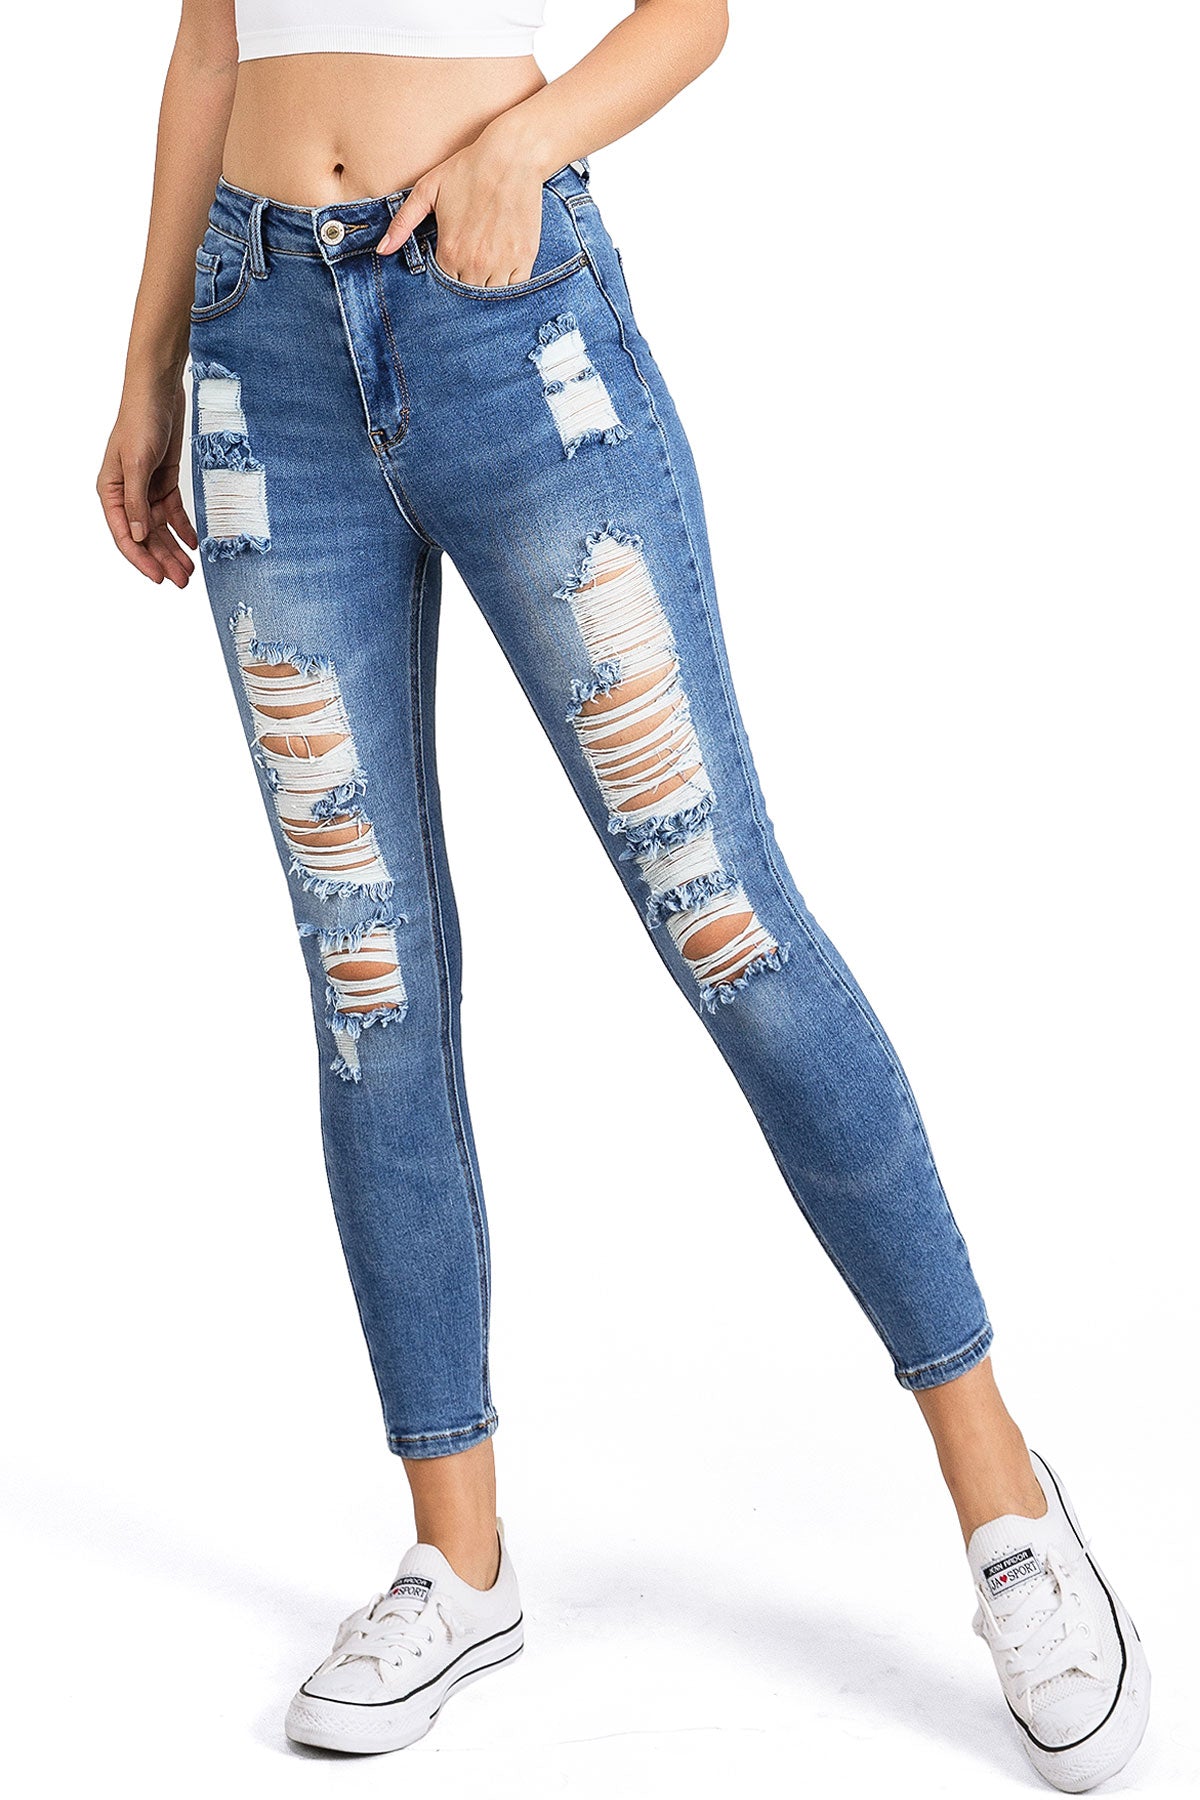 Wax Jean Women's Juniors Distressed High Rise Ankle Skinny Jeans (0, Medium Denim) - image 1 of 5